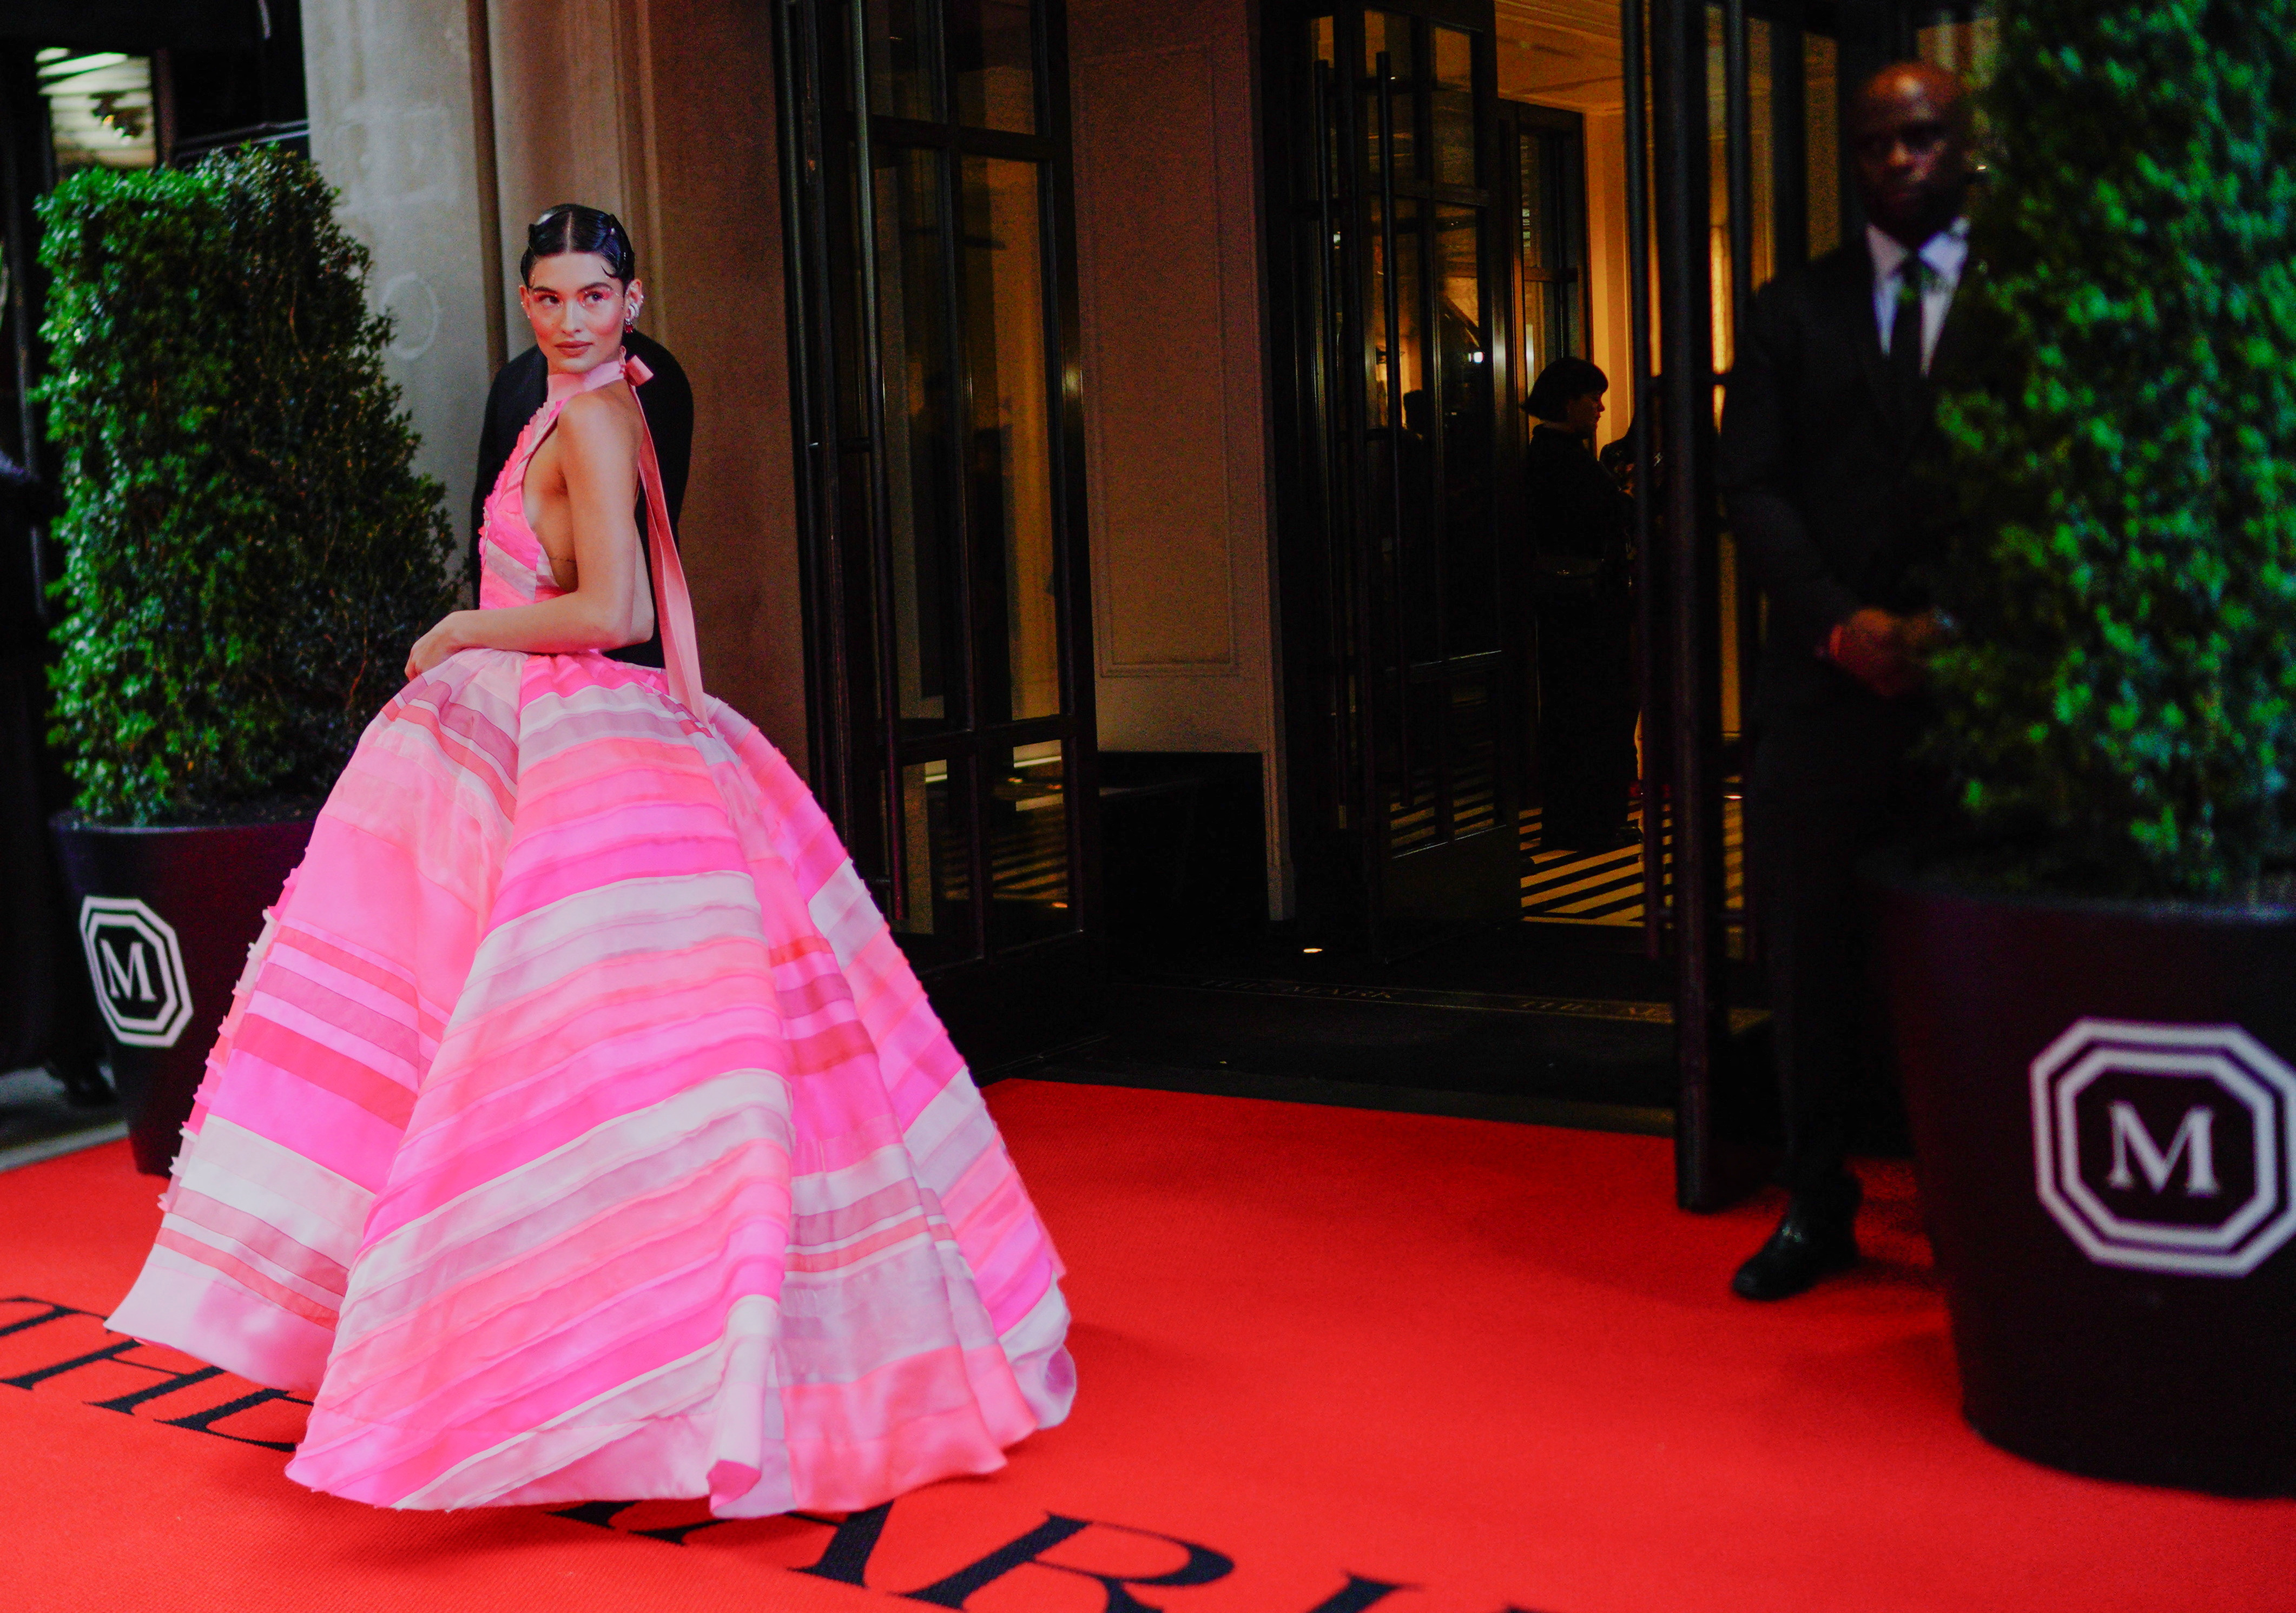 Grace Elizabeth chose a pink and white dress for this occasion / REUTERS / Eduardo Munoz